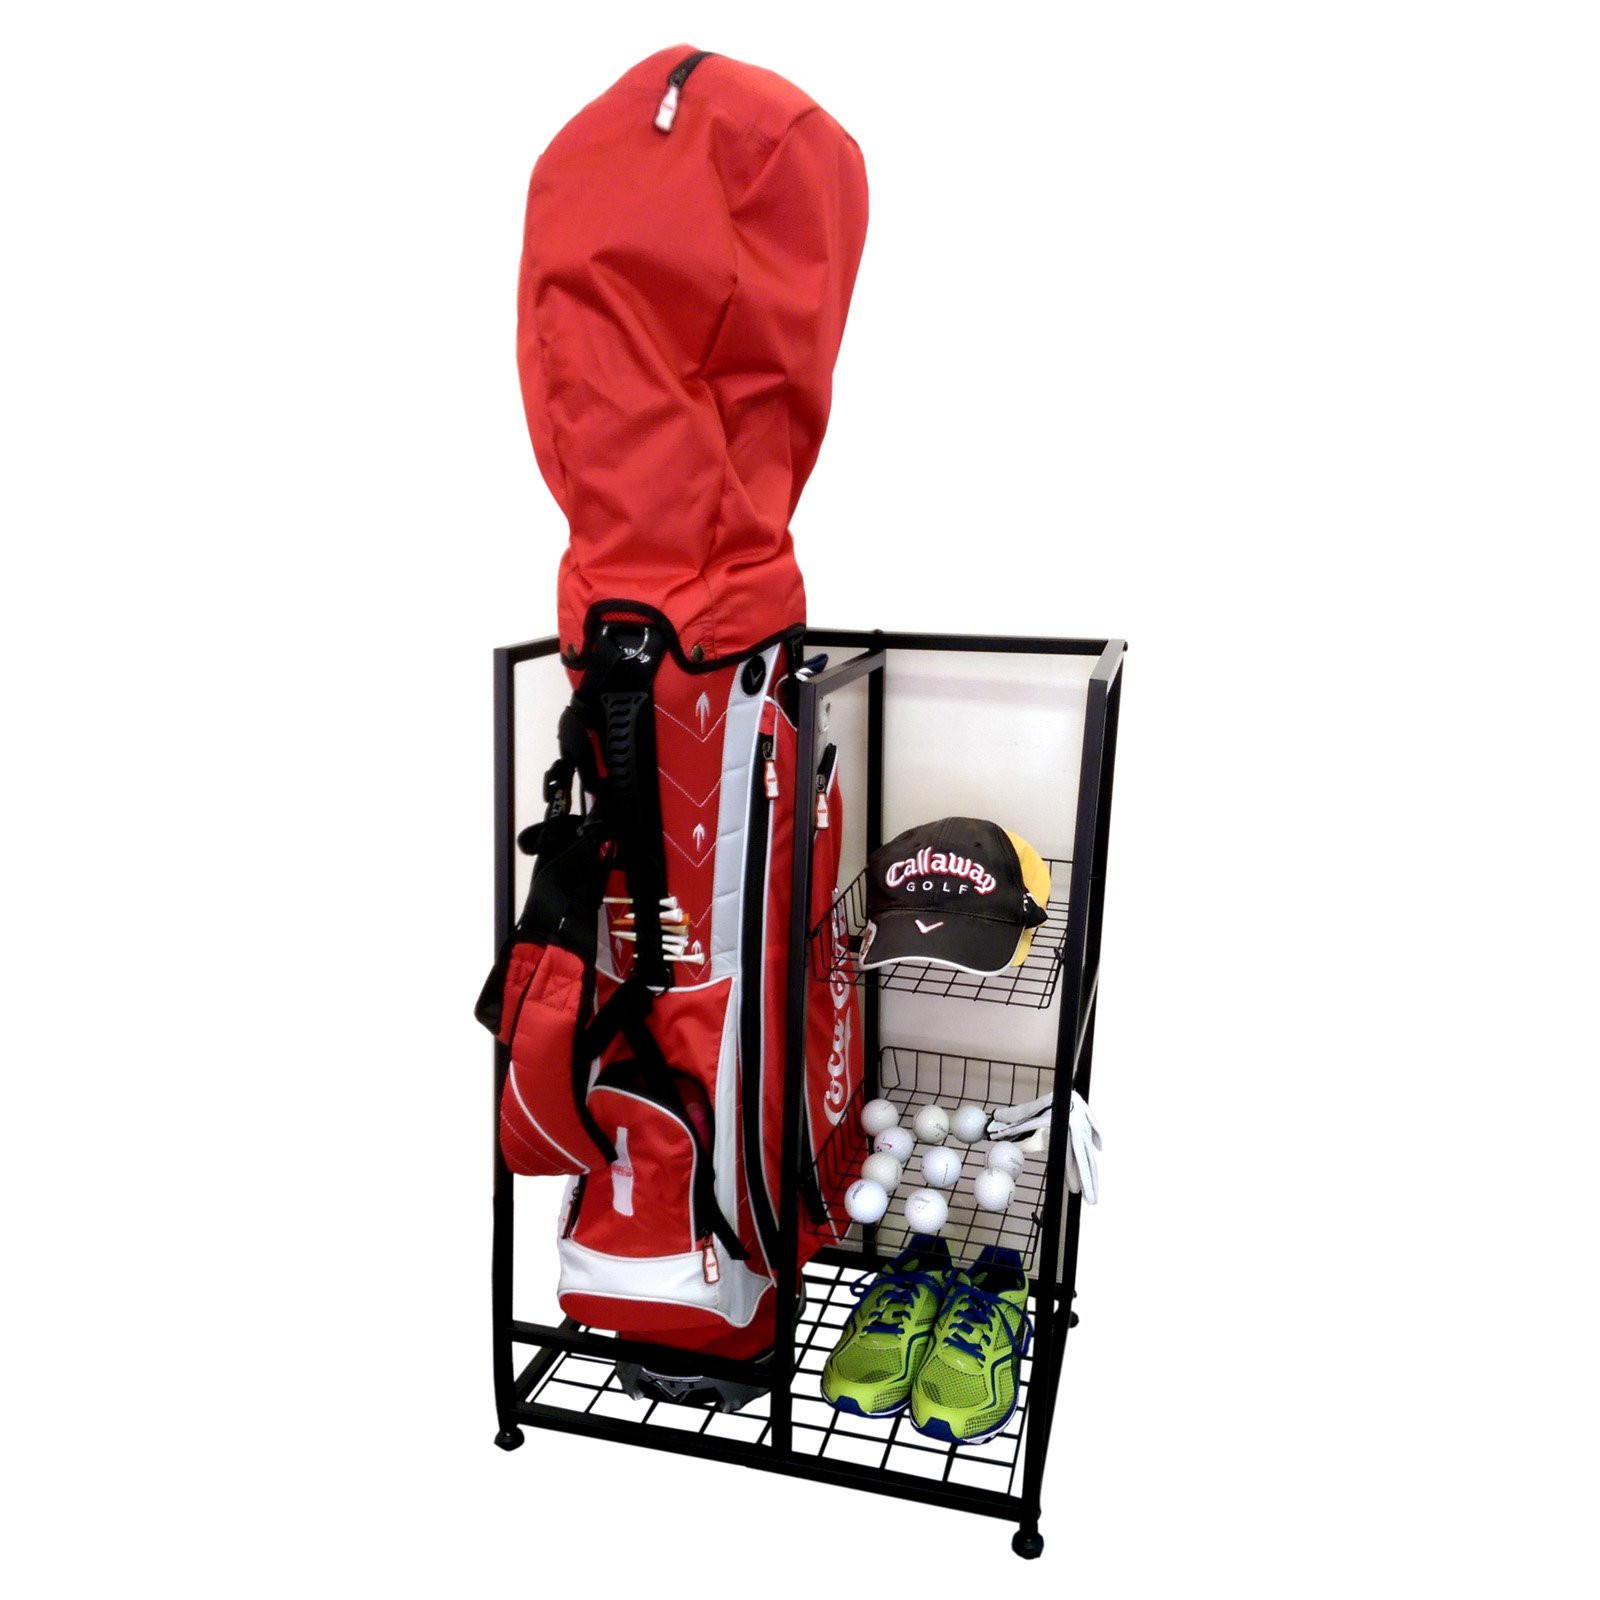 Golf Bag Organizer For Garage
 Single Golf Bag Organizer Garage Accessories Equipment